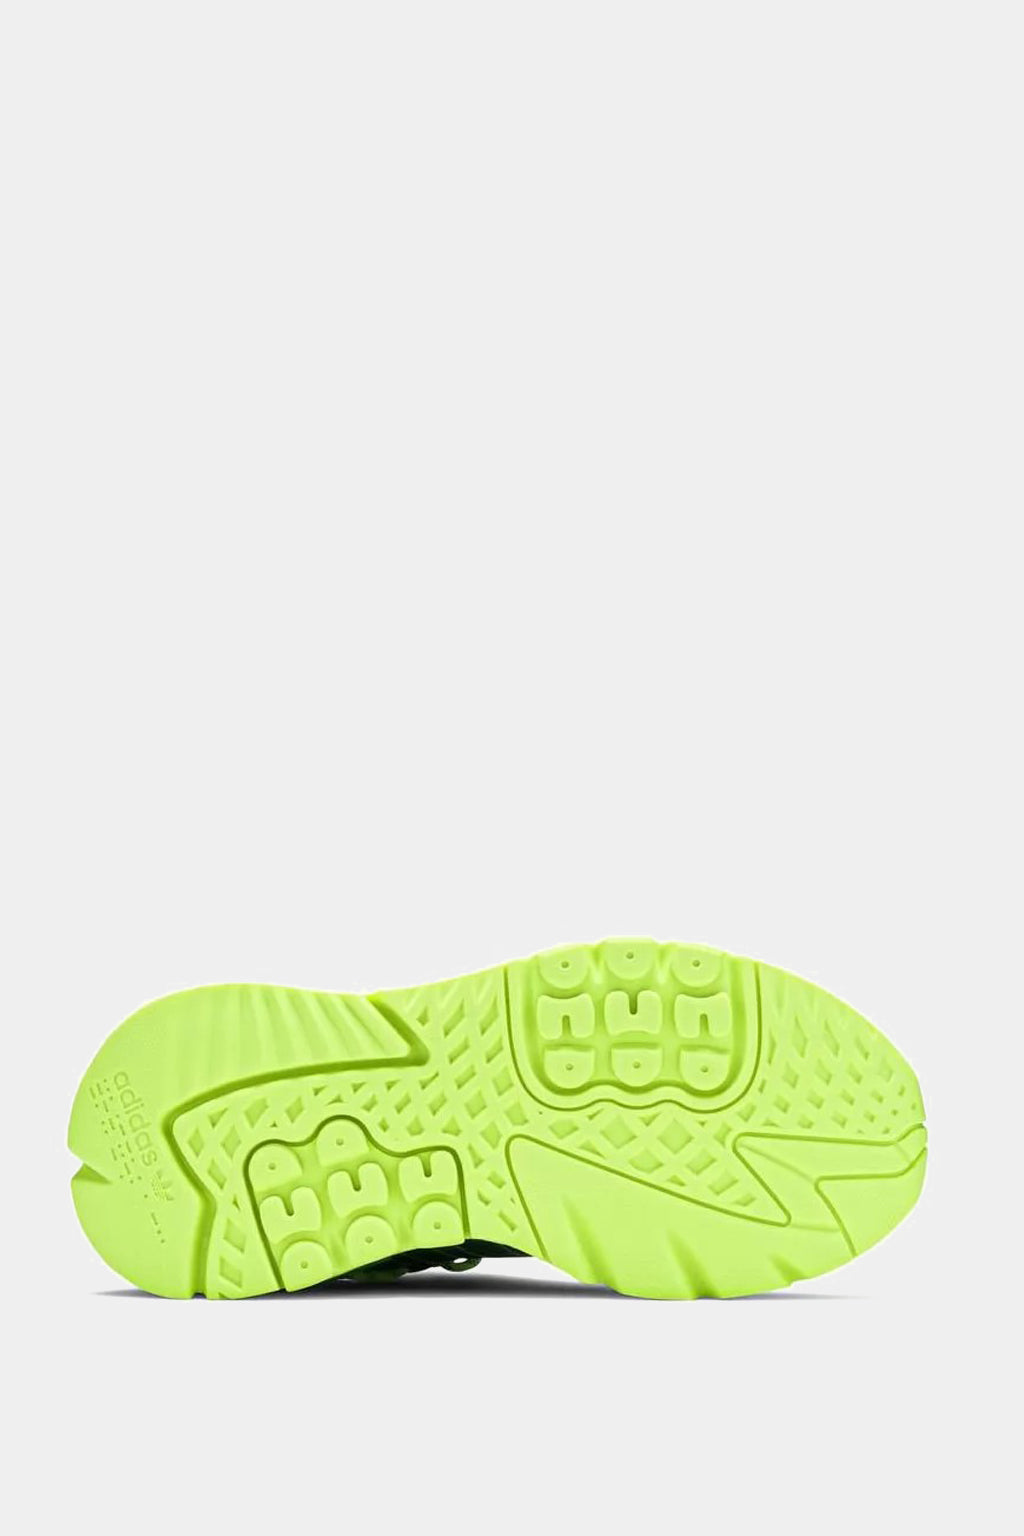 Adidas Originals - Ivy Park X Nite Jogger 'Dark Green' Sneakers